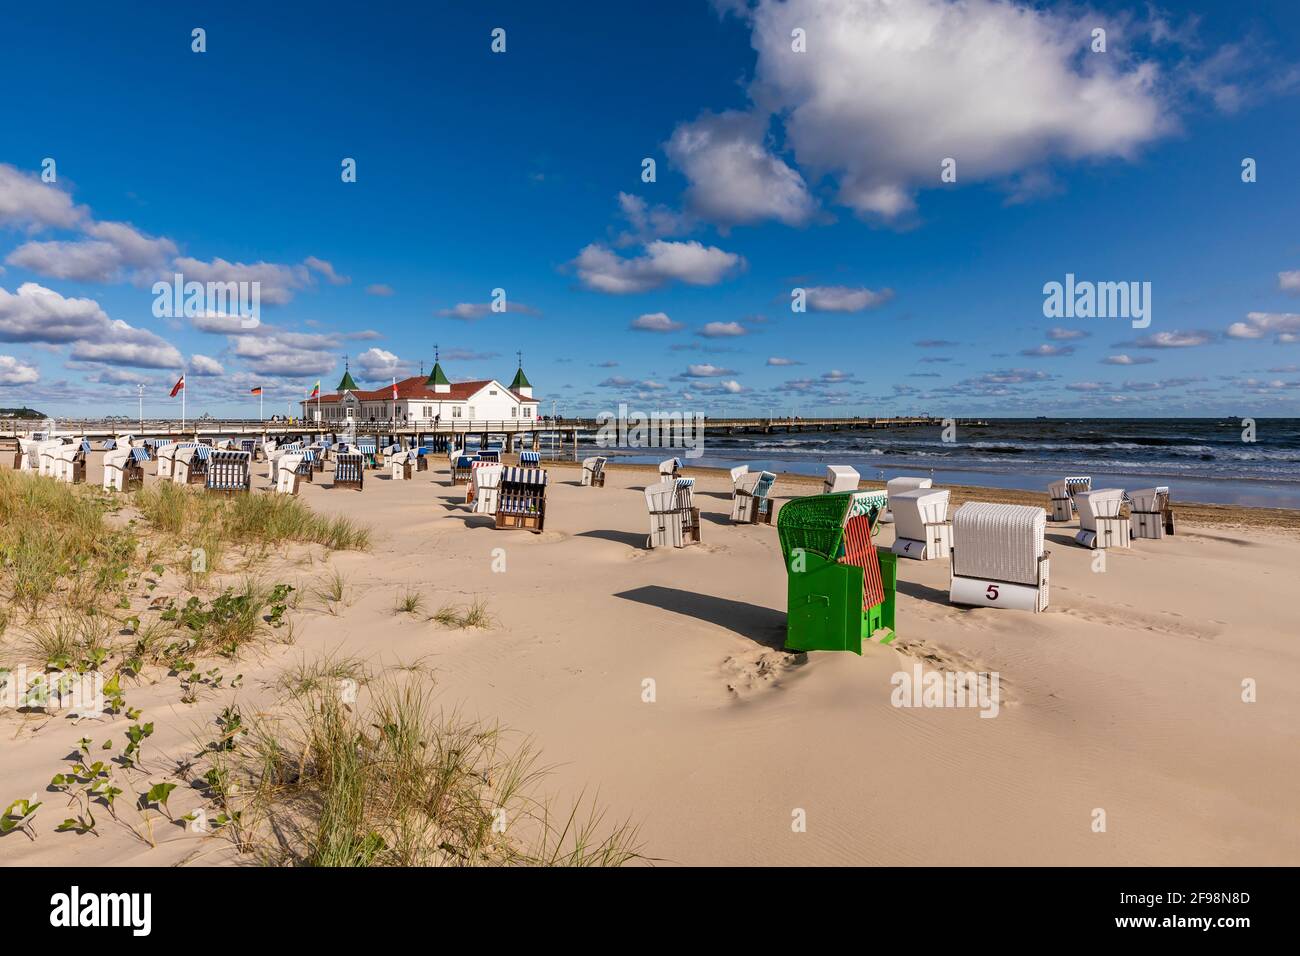 Germany, Mecklenburg-Western Pomerania, the Baltic Sea, Baltic Sea coast, Usedom island, Ahlbeck, seaside resort, pier, beach, beach chairs Stock Photo